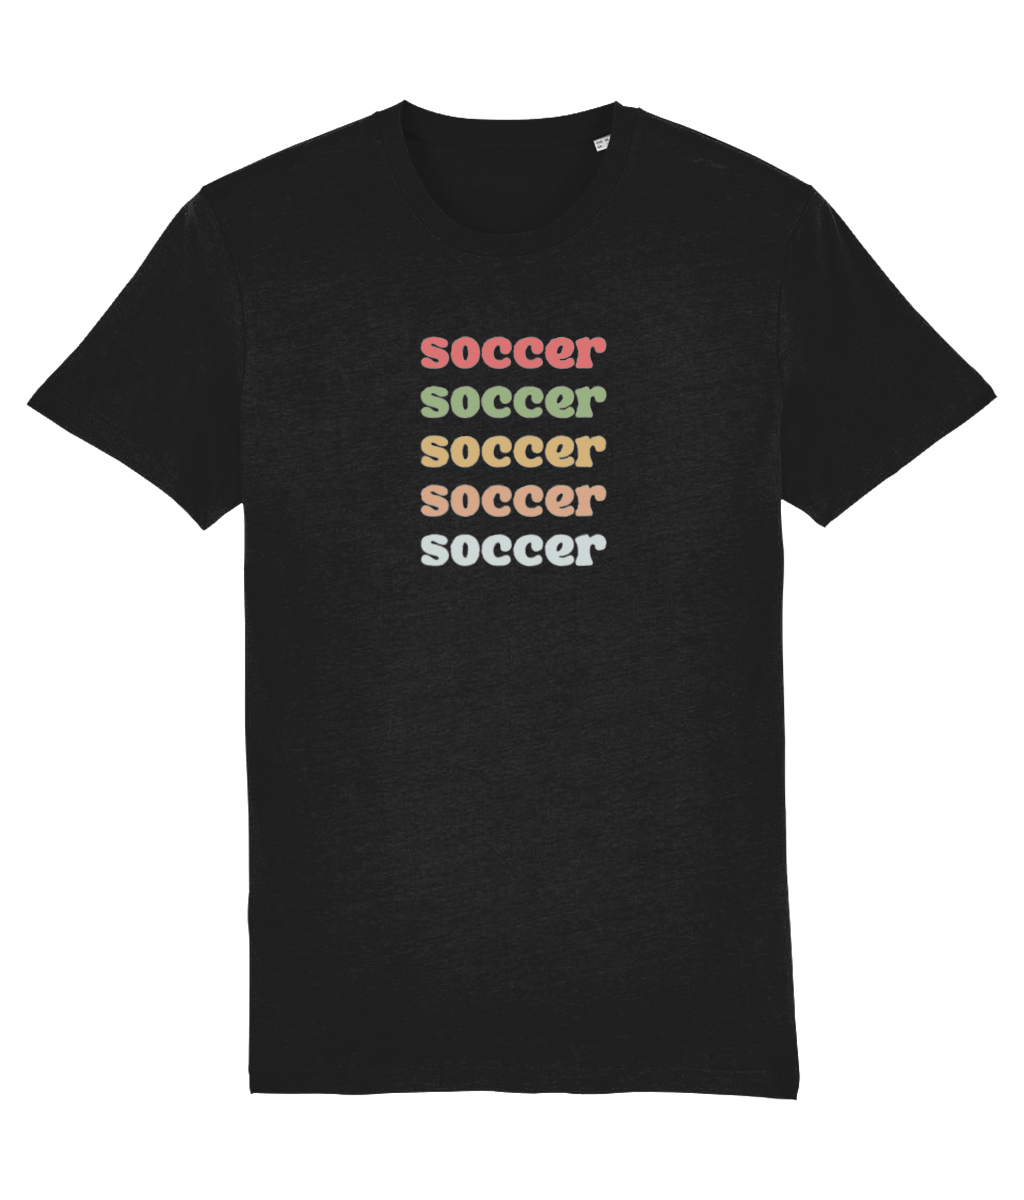 Retro Style Soccer T-Shirt